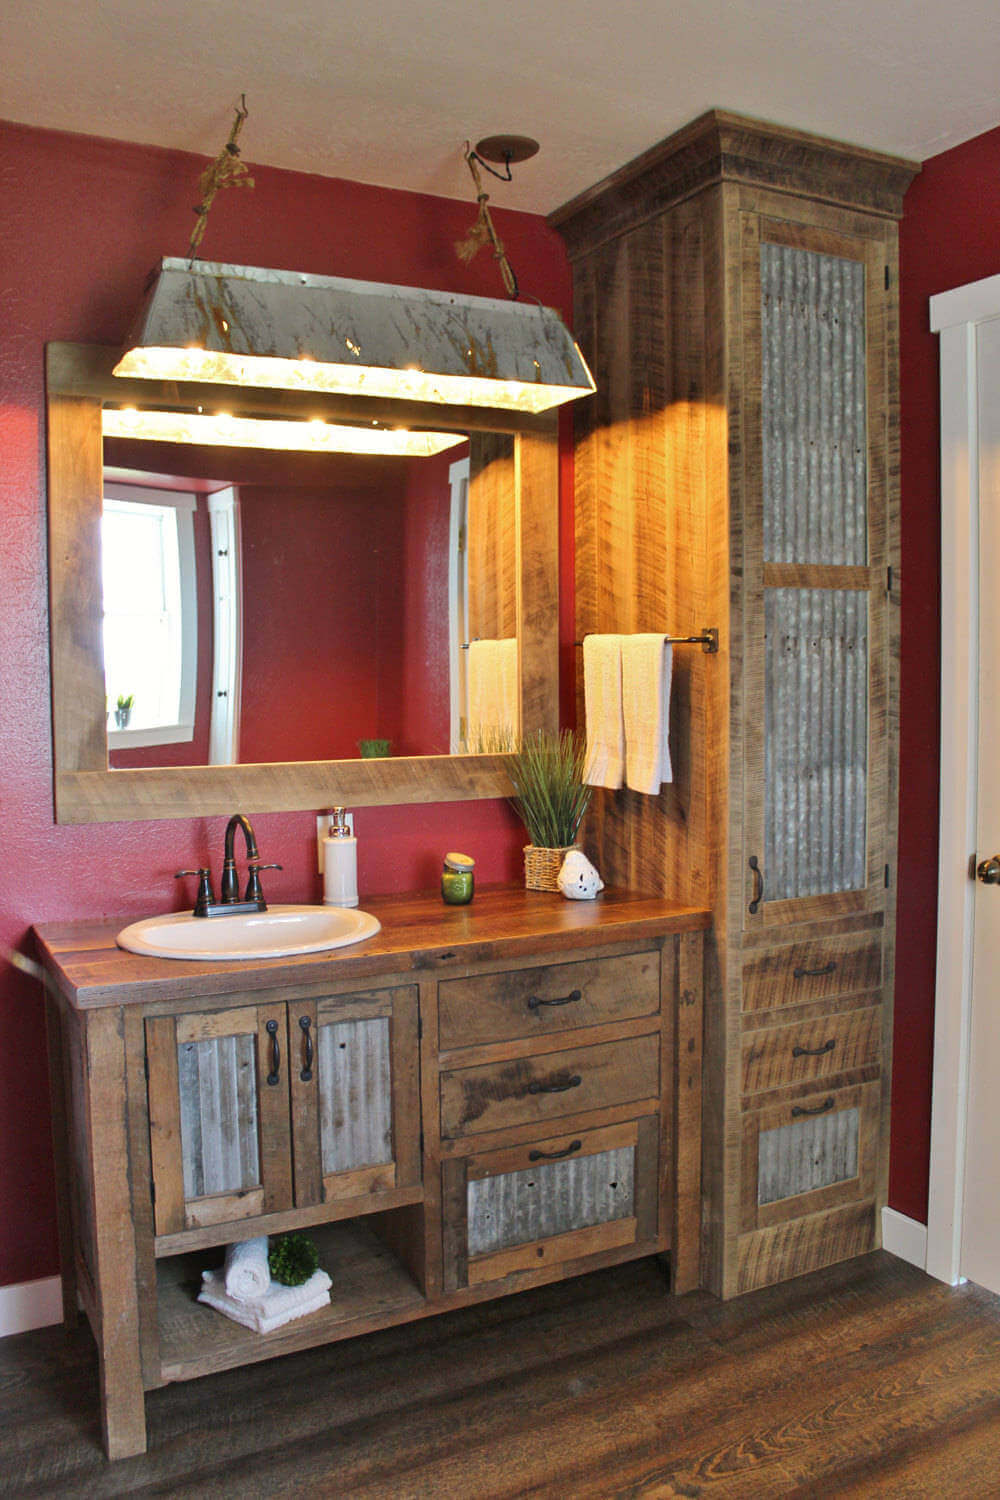 Diy Rustic Farmhouse Bathroom Vanity Ideas, Build Your Own Rustic Bathroom Vanity